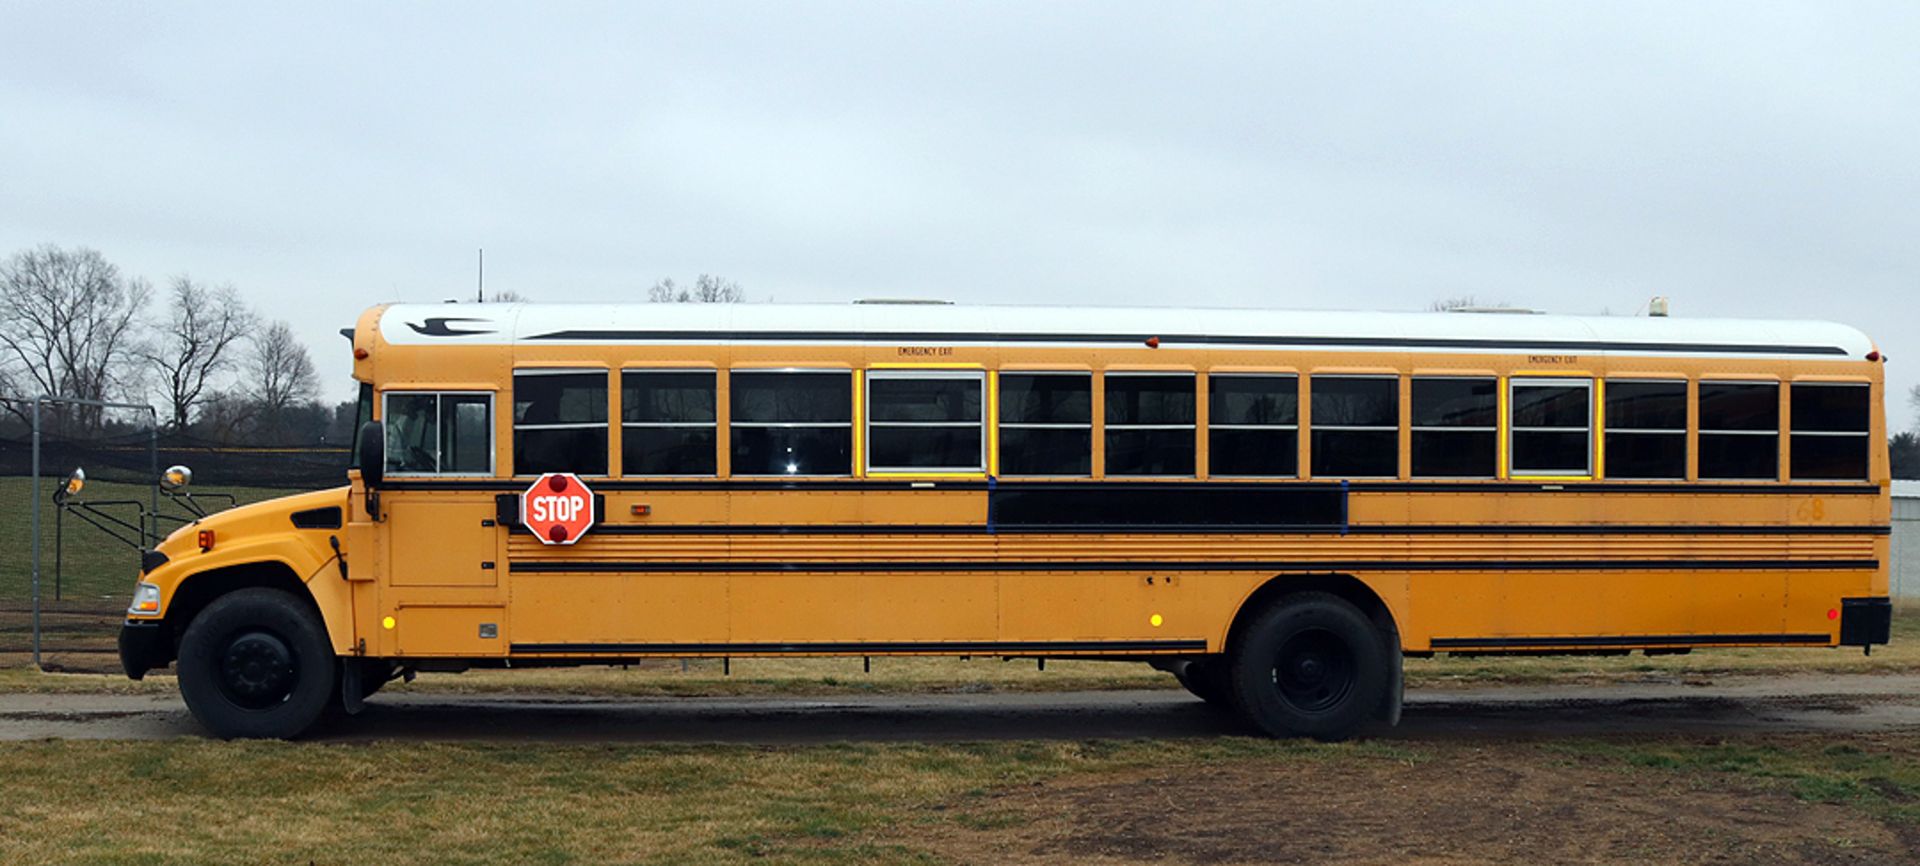 2011 Bluebird 78 Passenger School Bus with Cummins Engine, 110,600 miles, VIN 1BAKJCPA5BF278666 - Image 4 of 16